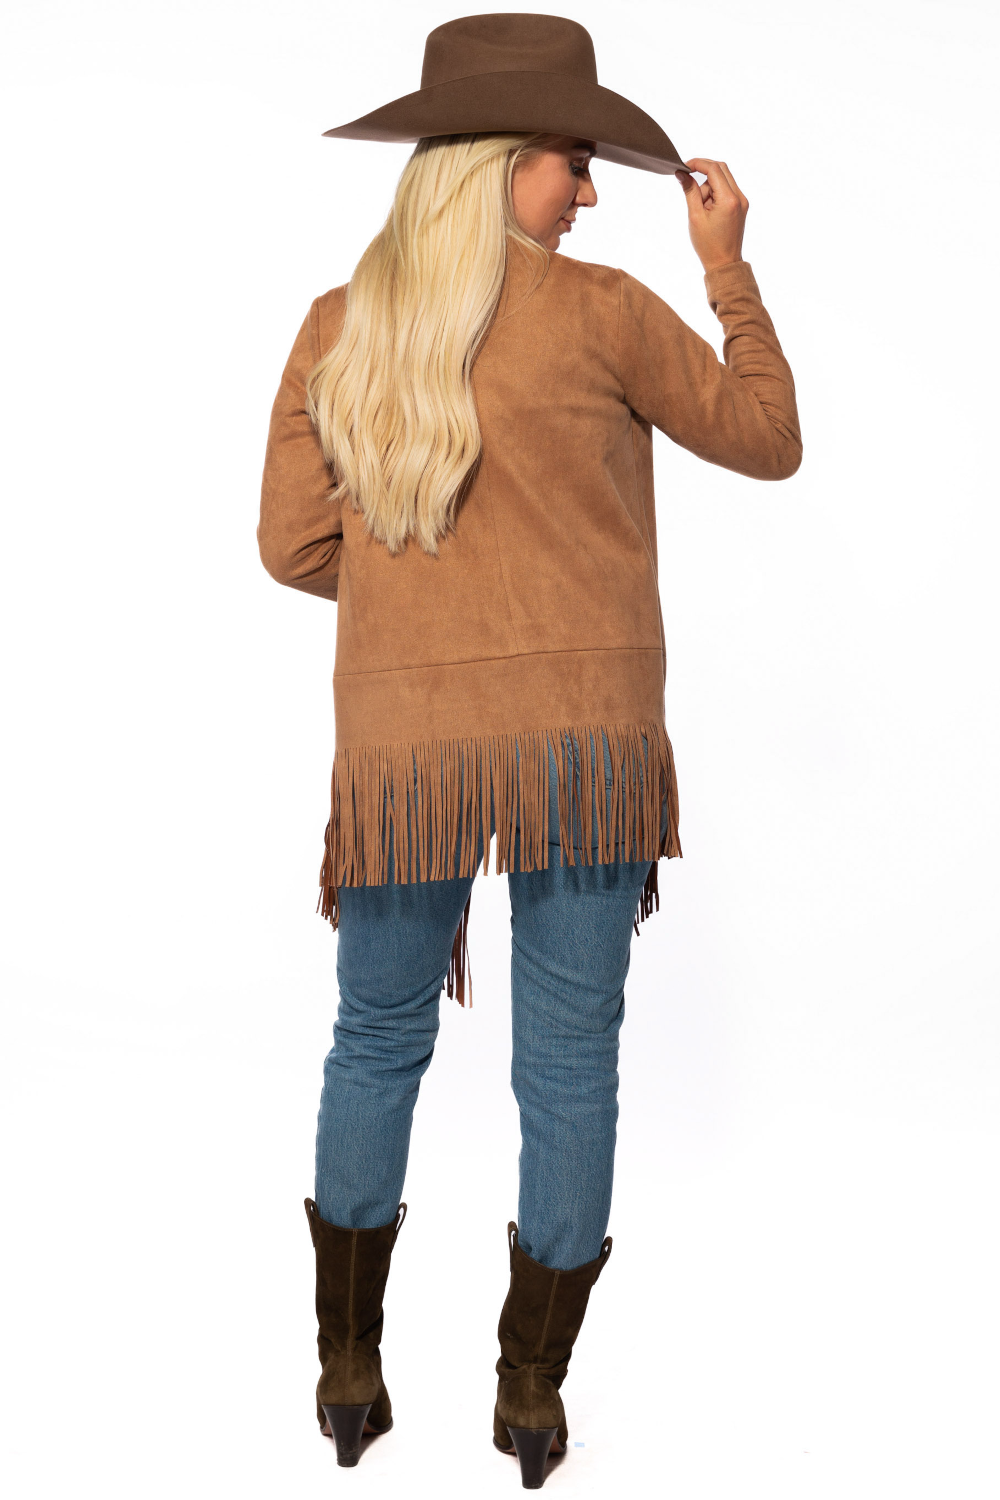 Jacket - Sequoia's Women's Jacket (PRE-SALE ONLY)